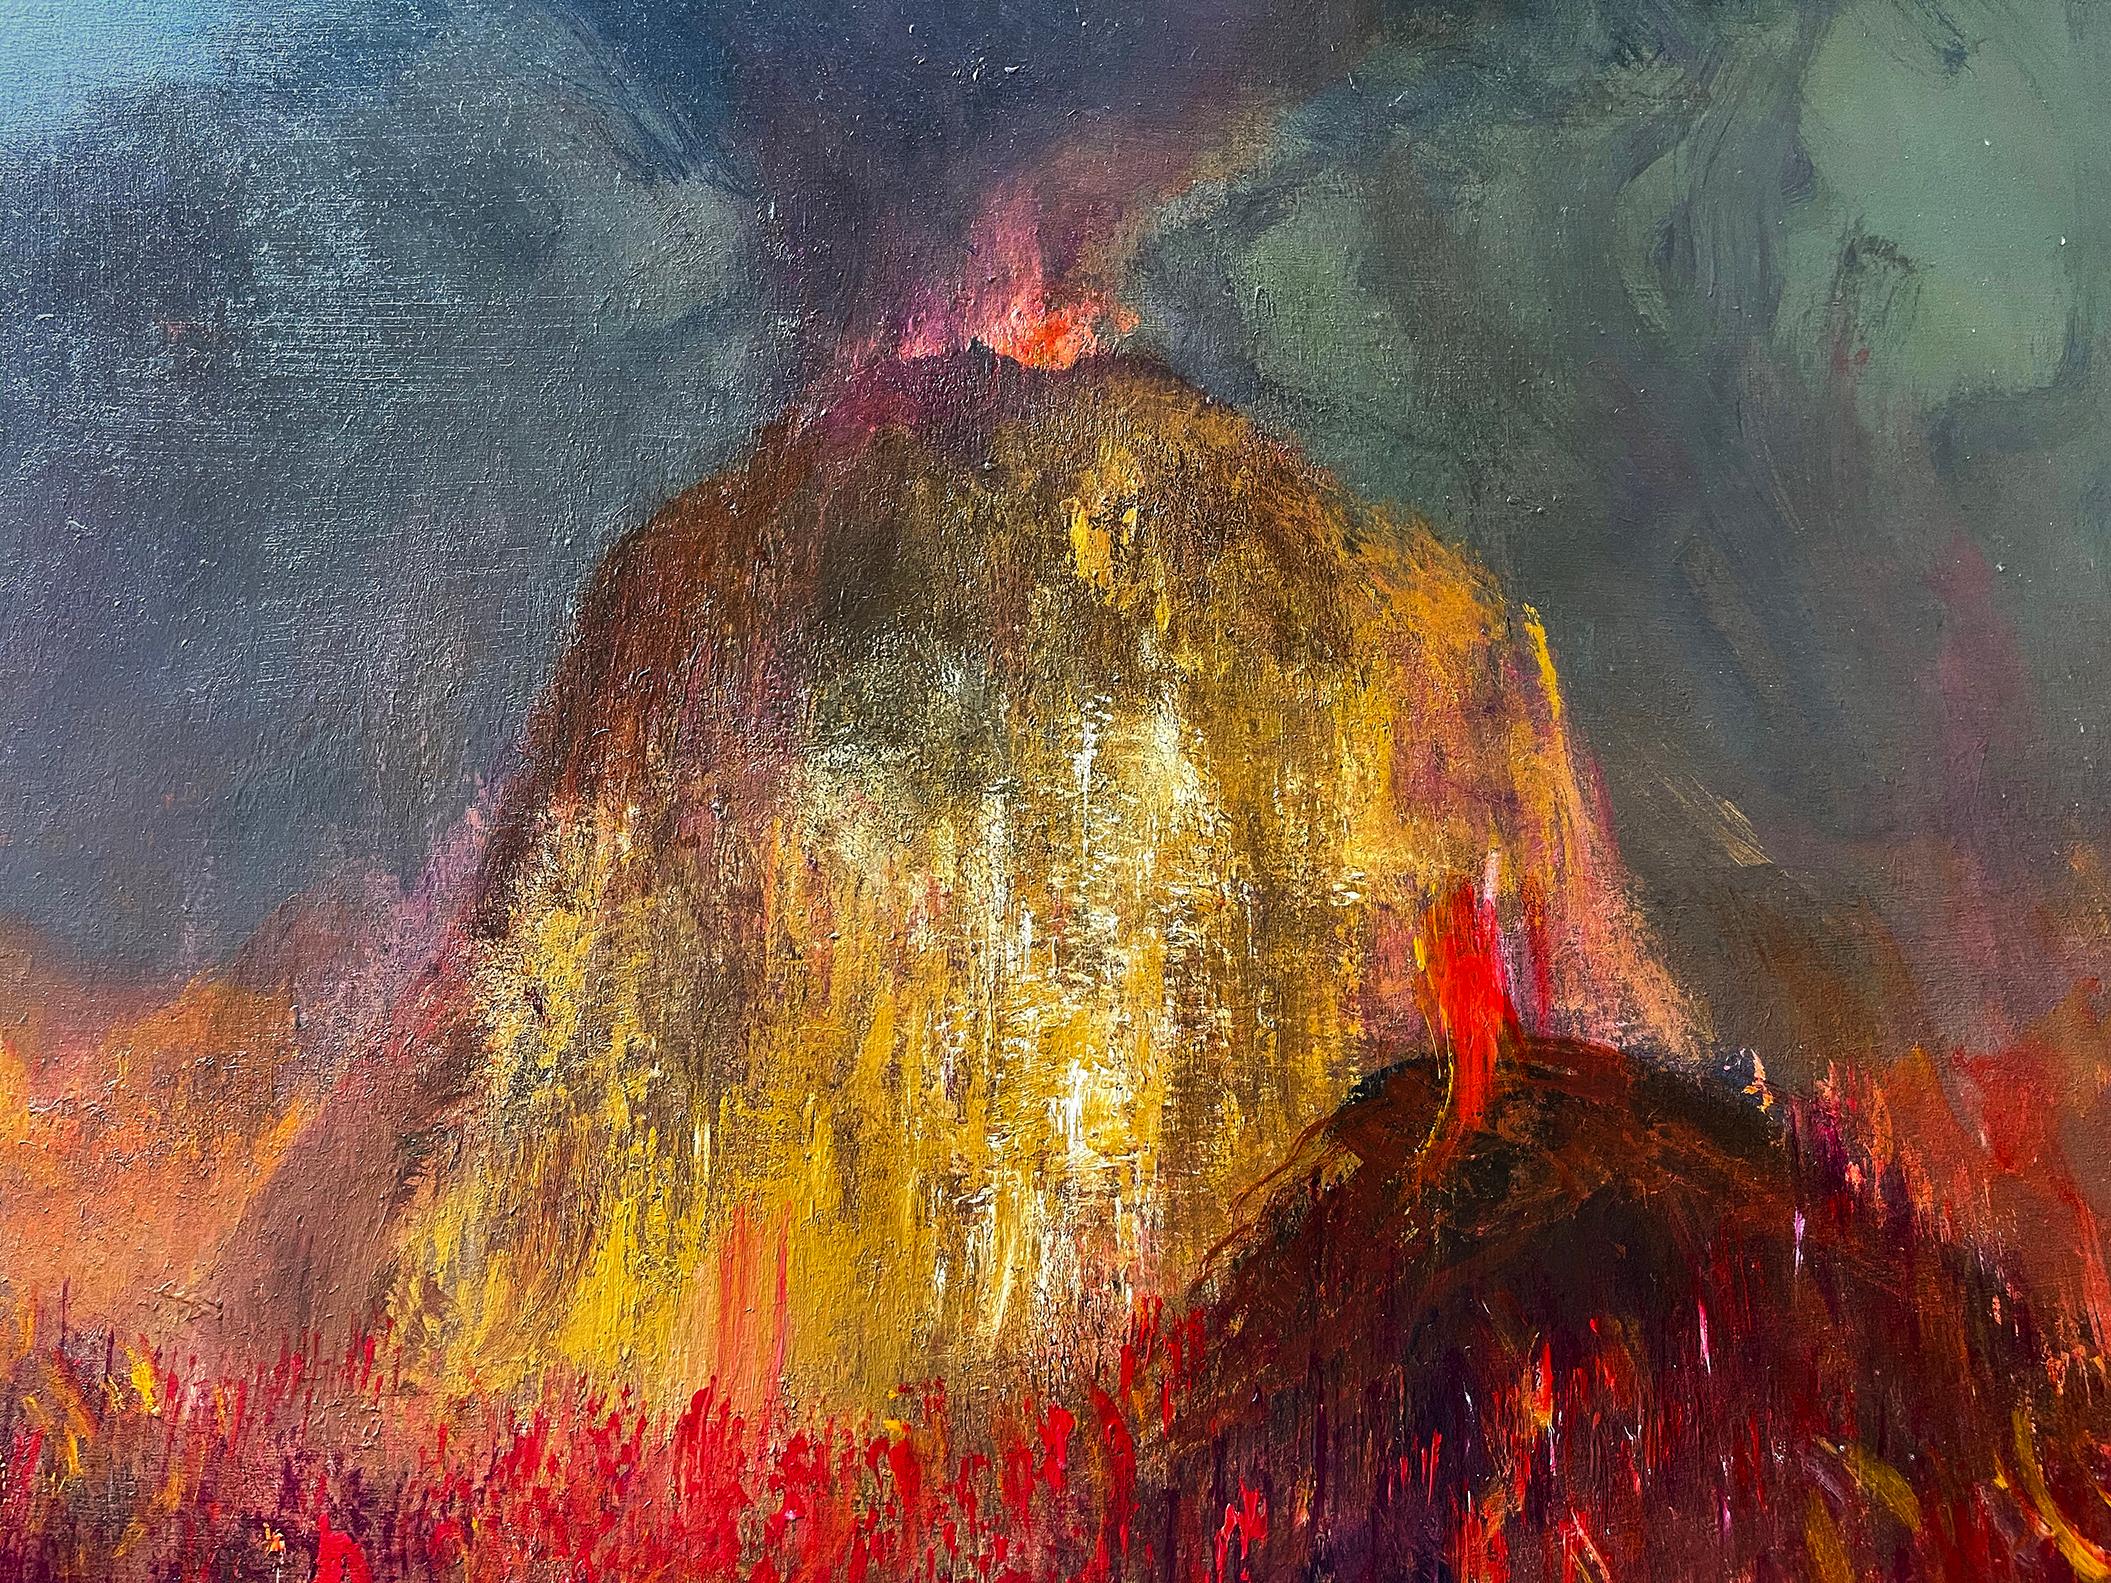 Volcano-Eruption – Explosive Fire Lava-Flow from Hell (Surrealismus), Painting, von Peter Ellenshaw